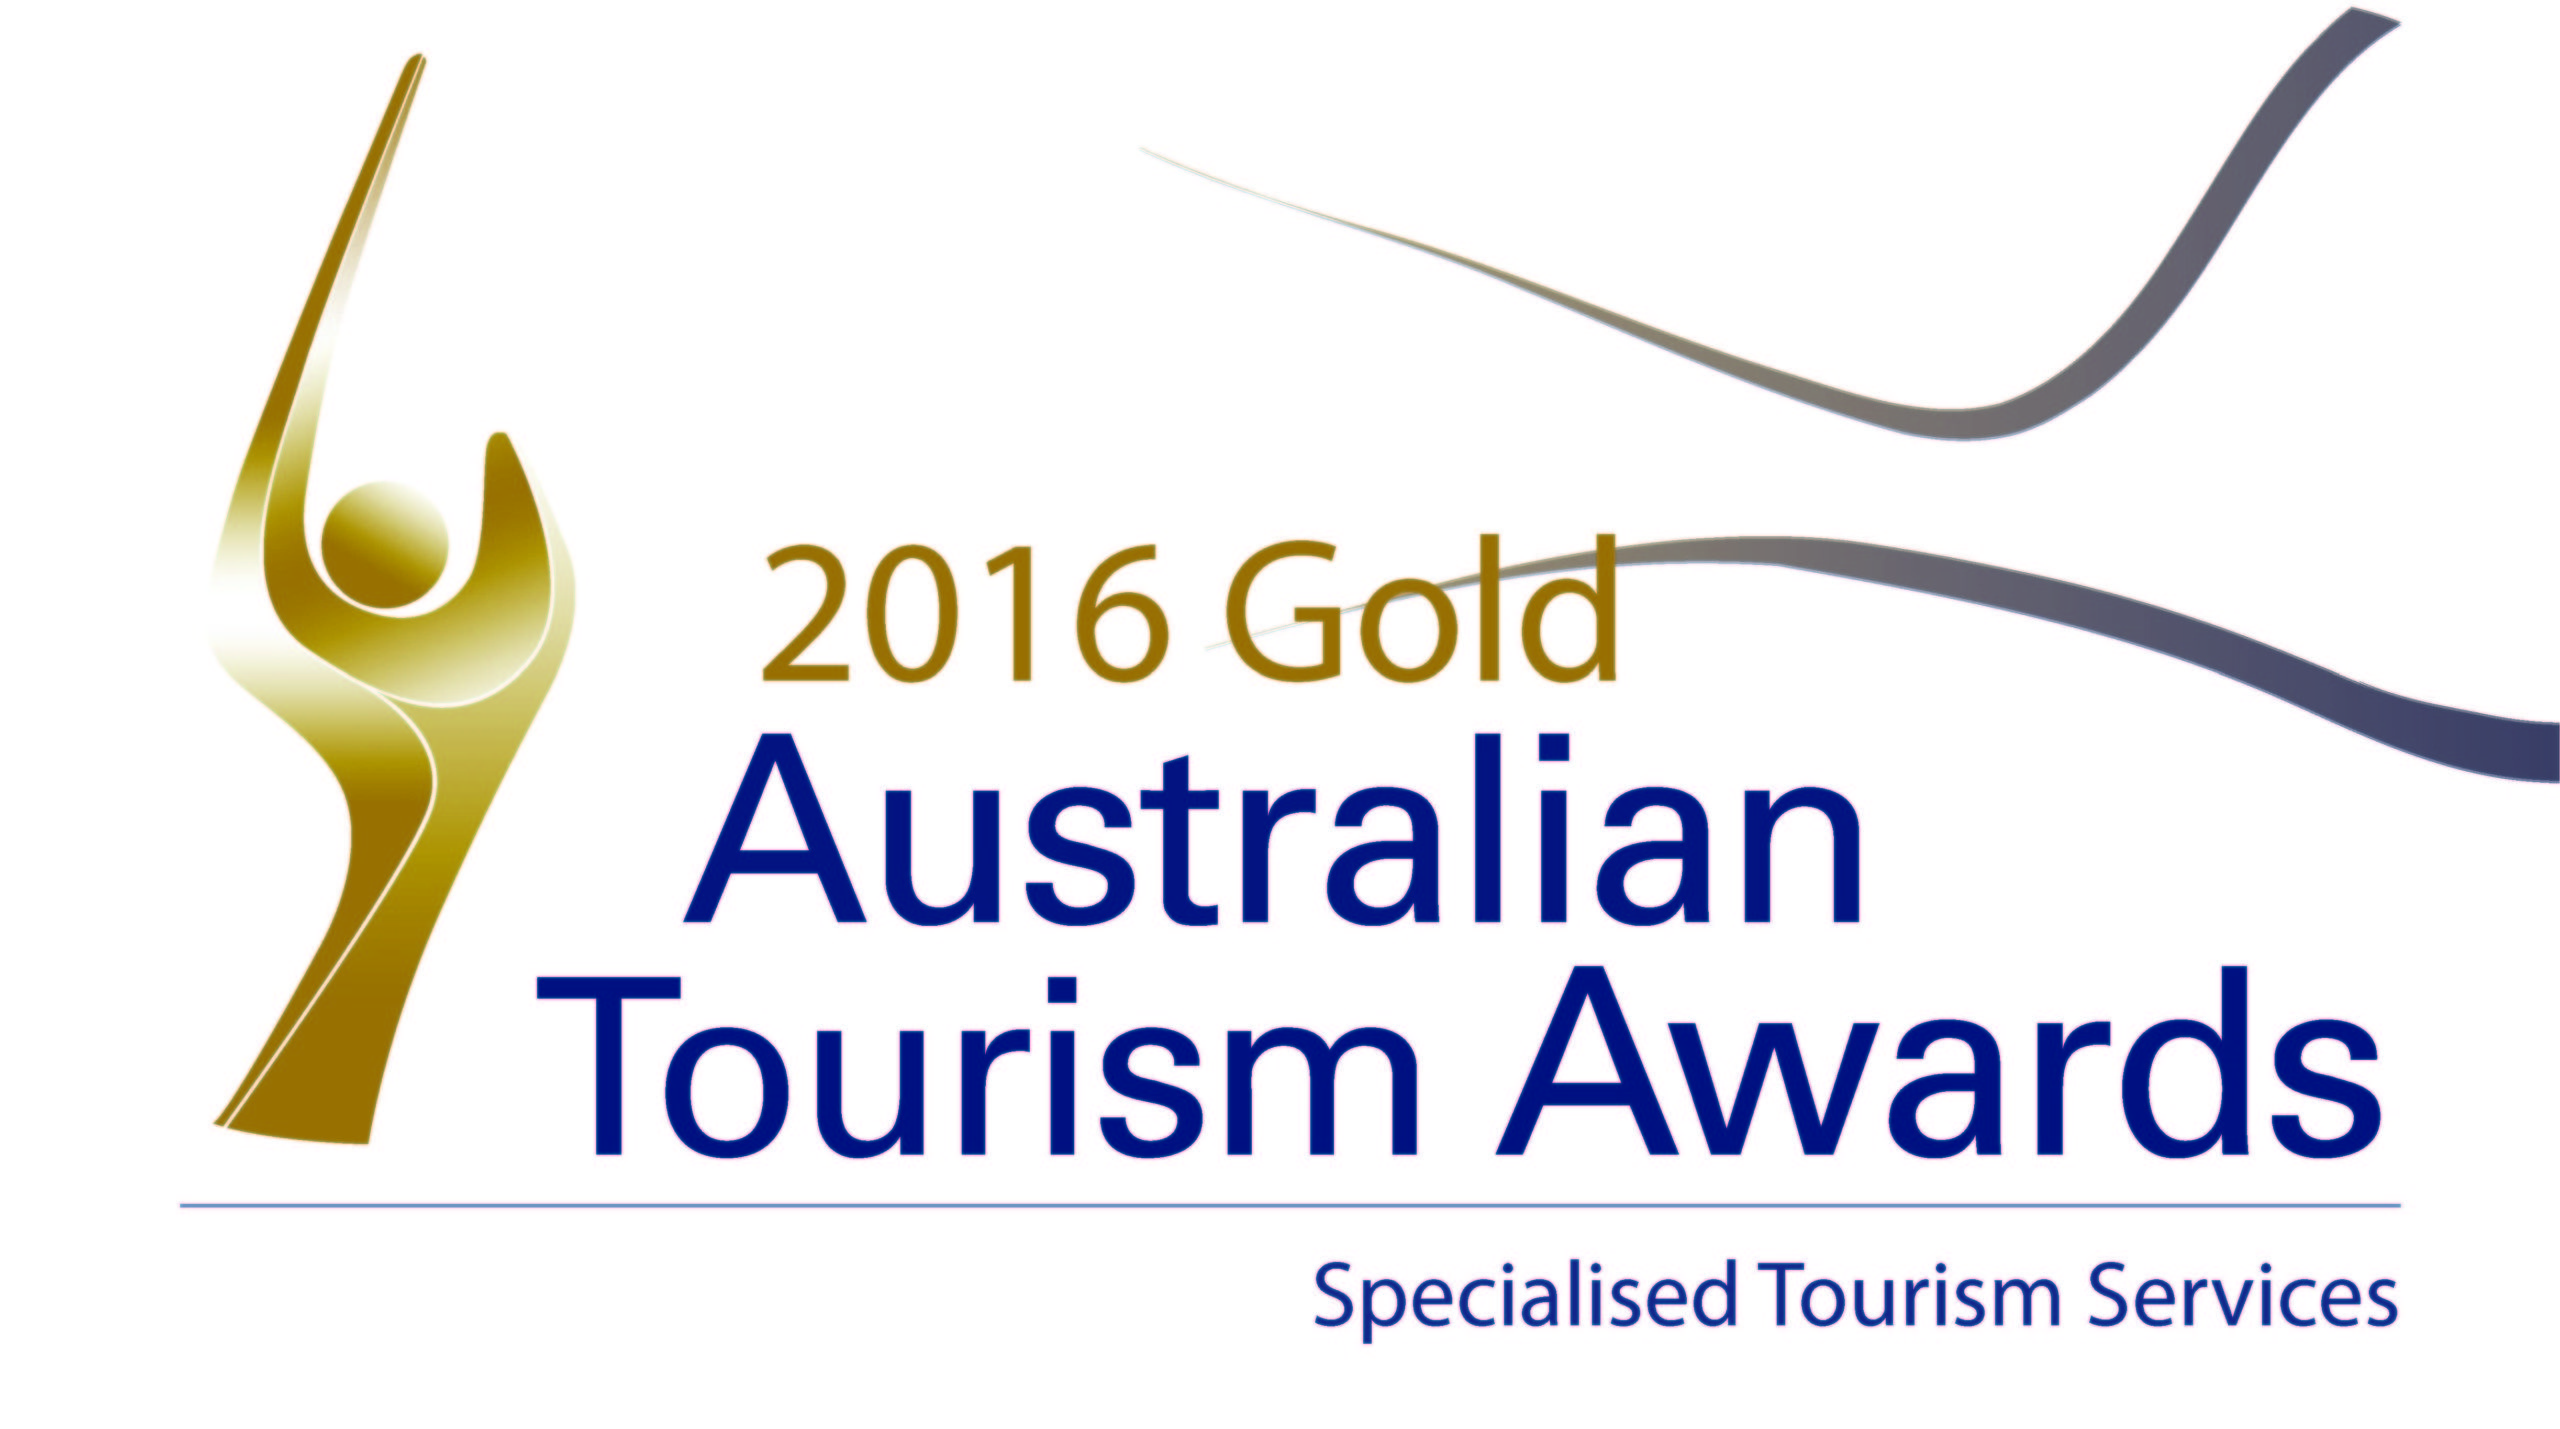 2016 Gold Australian Tourism Awards